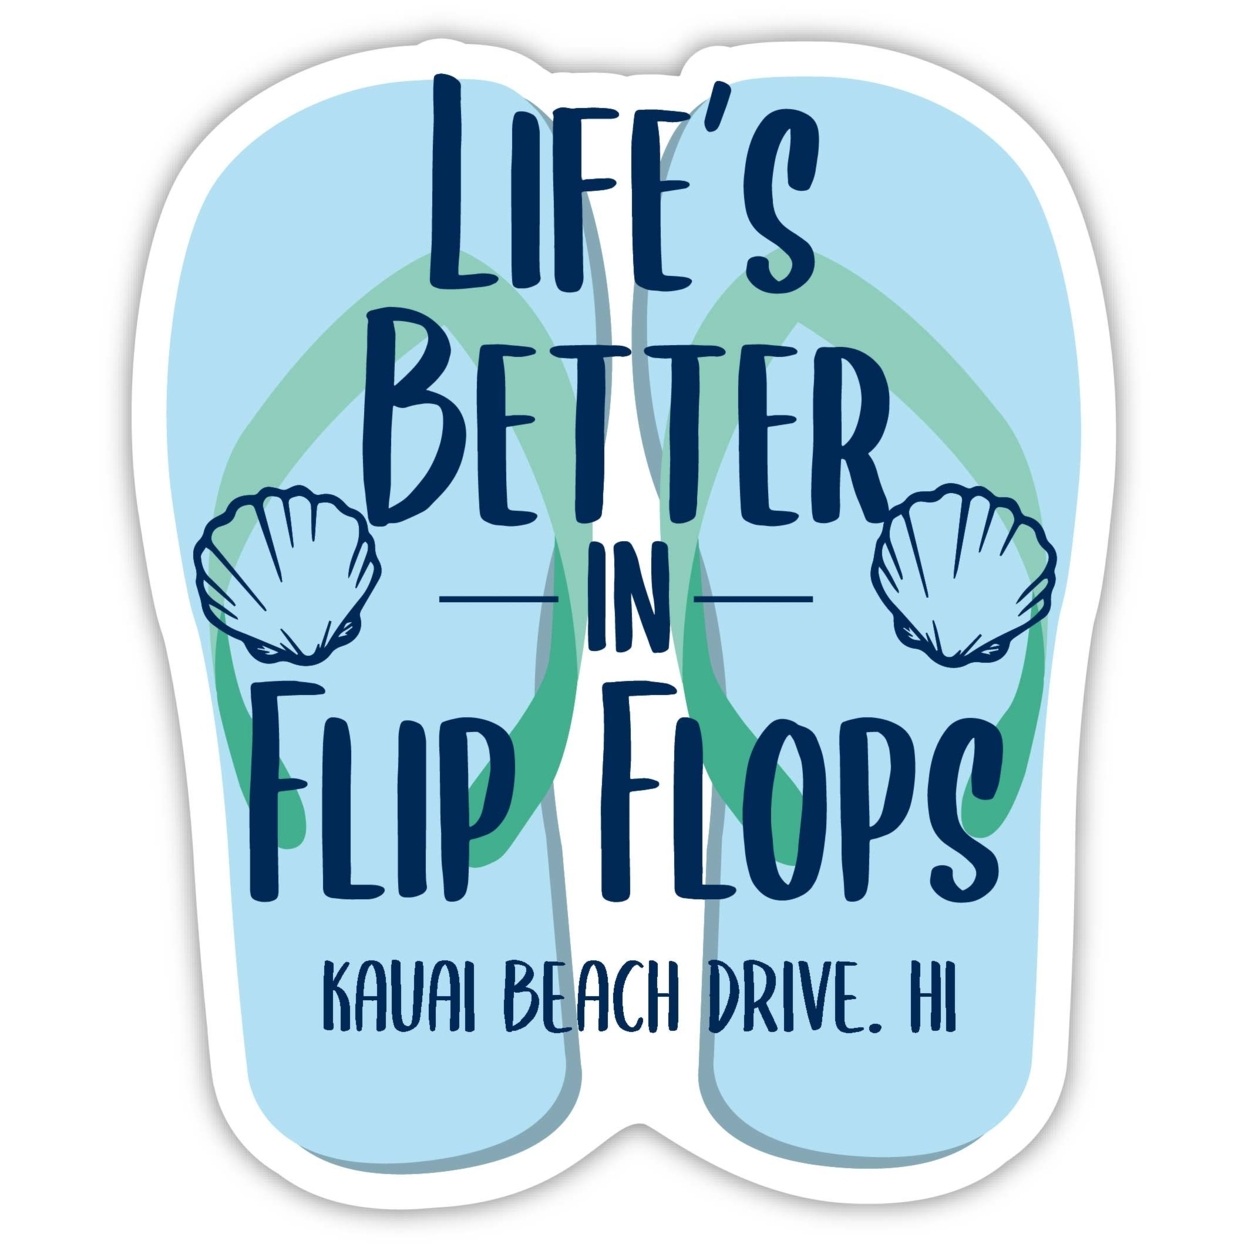 Kauai Beach Drive California Souvenir 4 Inch Vinyl Decal Sticker Flip Flop Design